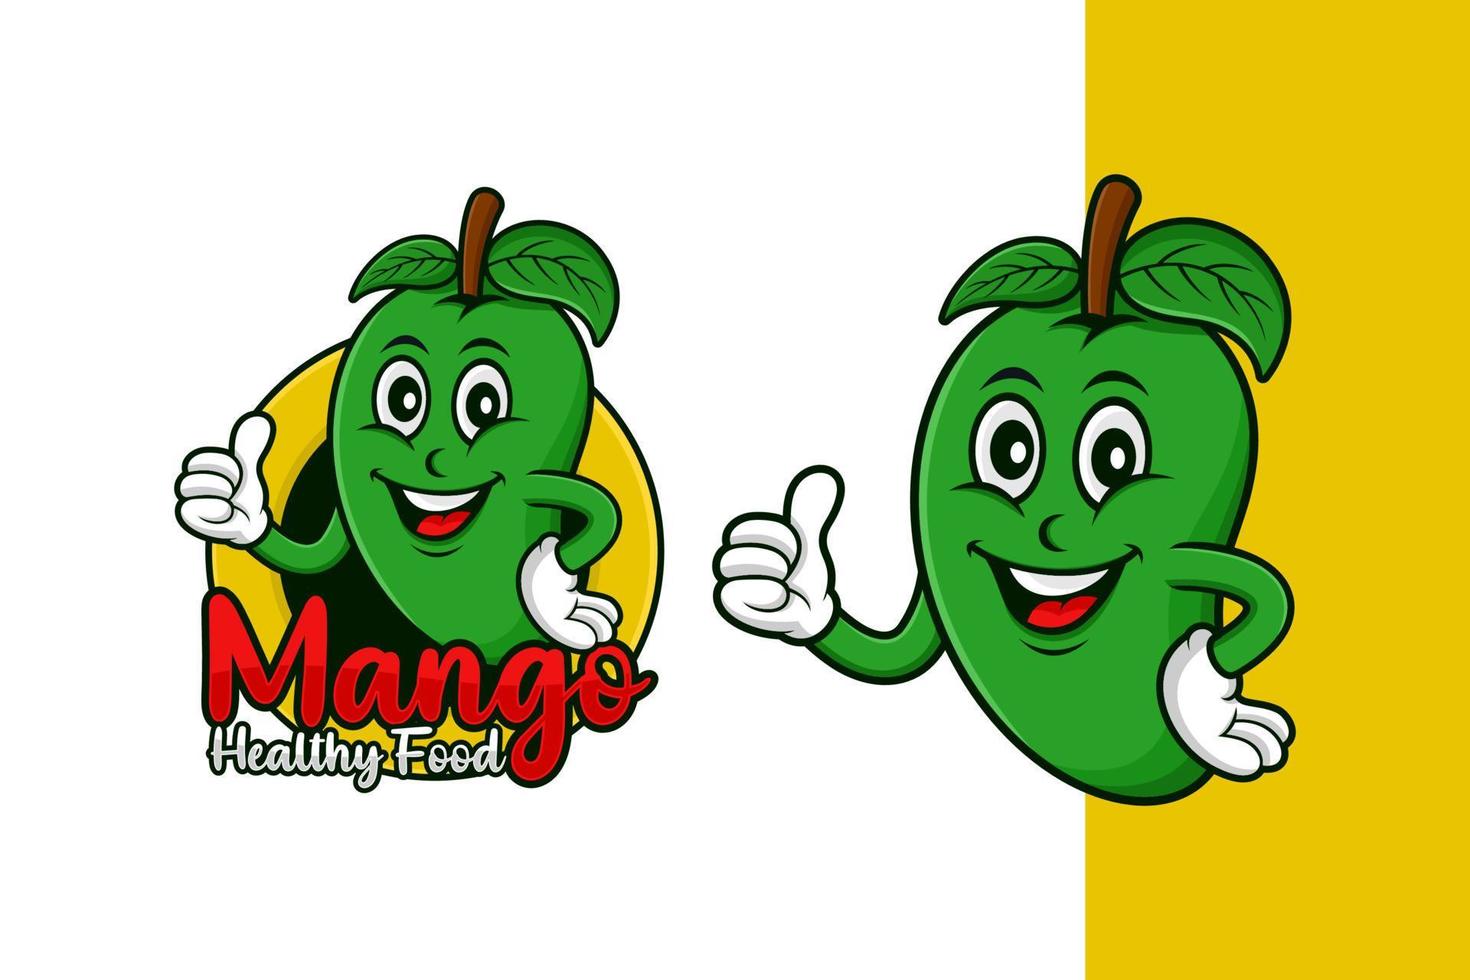 Mango healthy food mascot cartoon design illustration vector